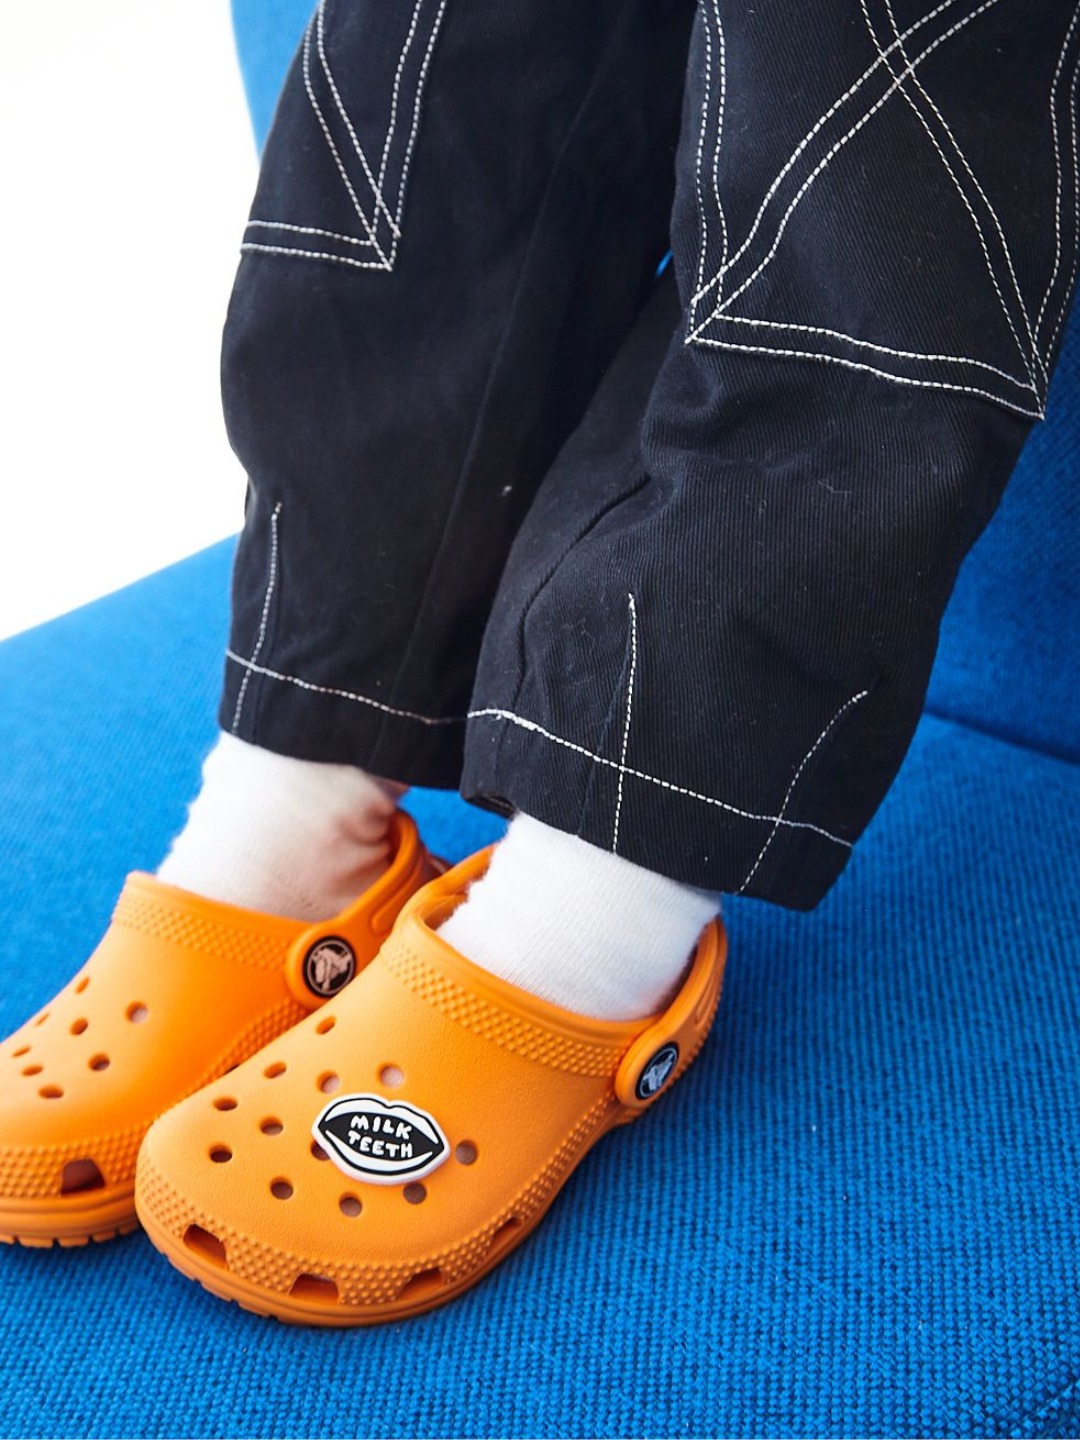 A child wearing a pair of orange Crocs with a Milk Teeth logo charm